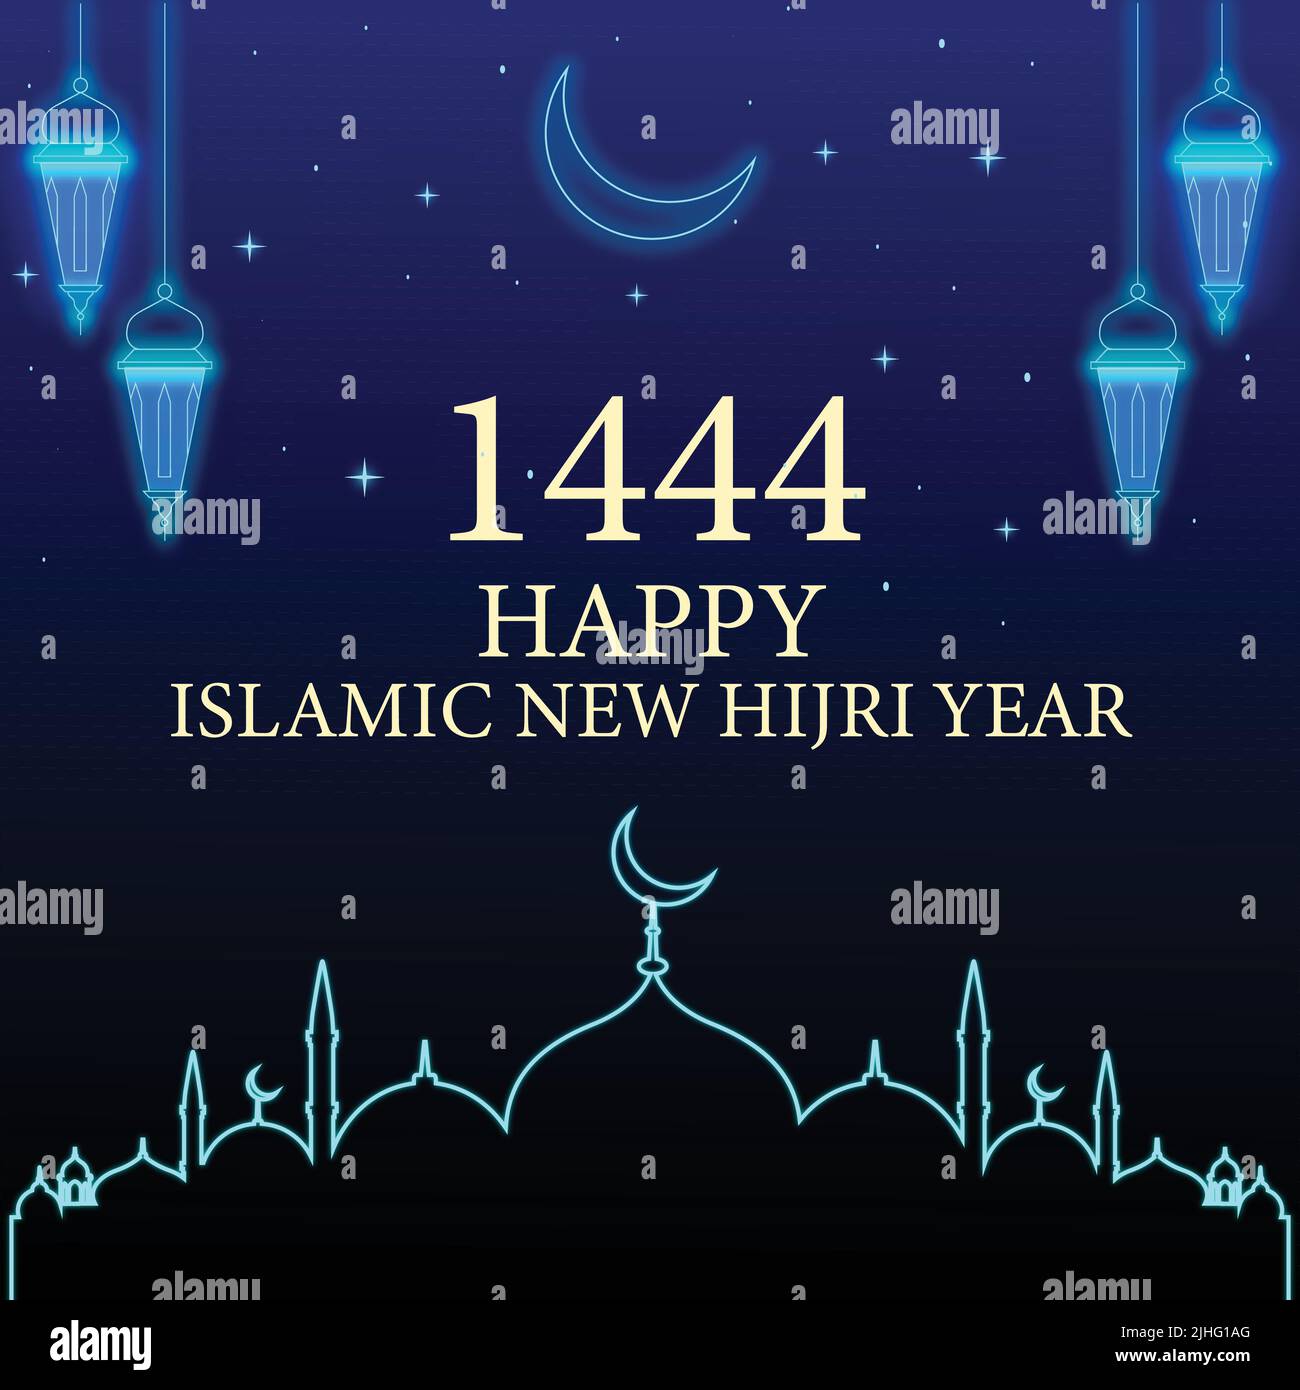 Happy New Hijri Year Abstract Designs Illustration Stock Vector ...